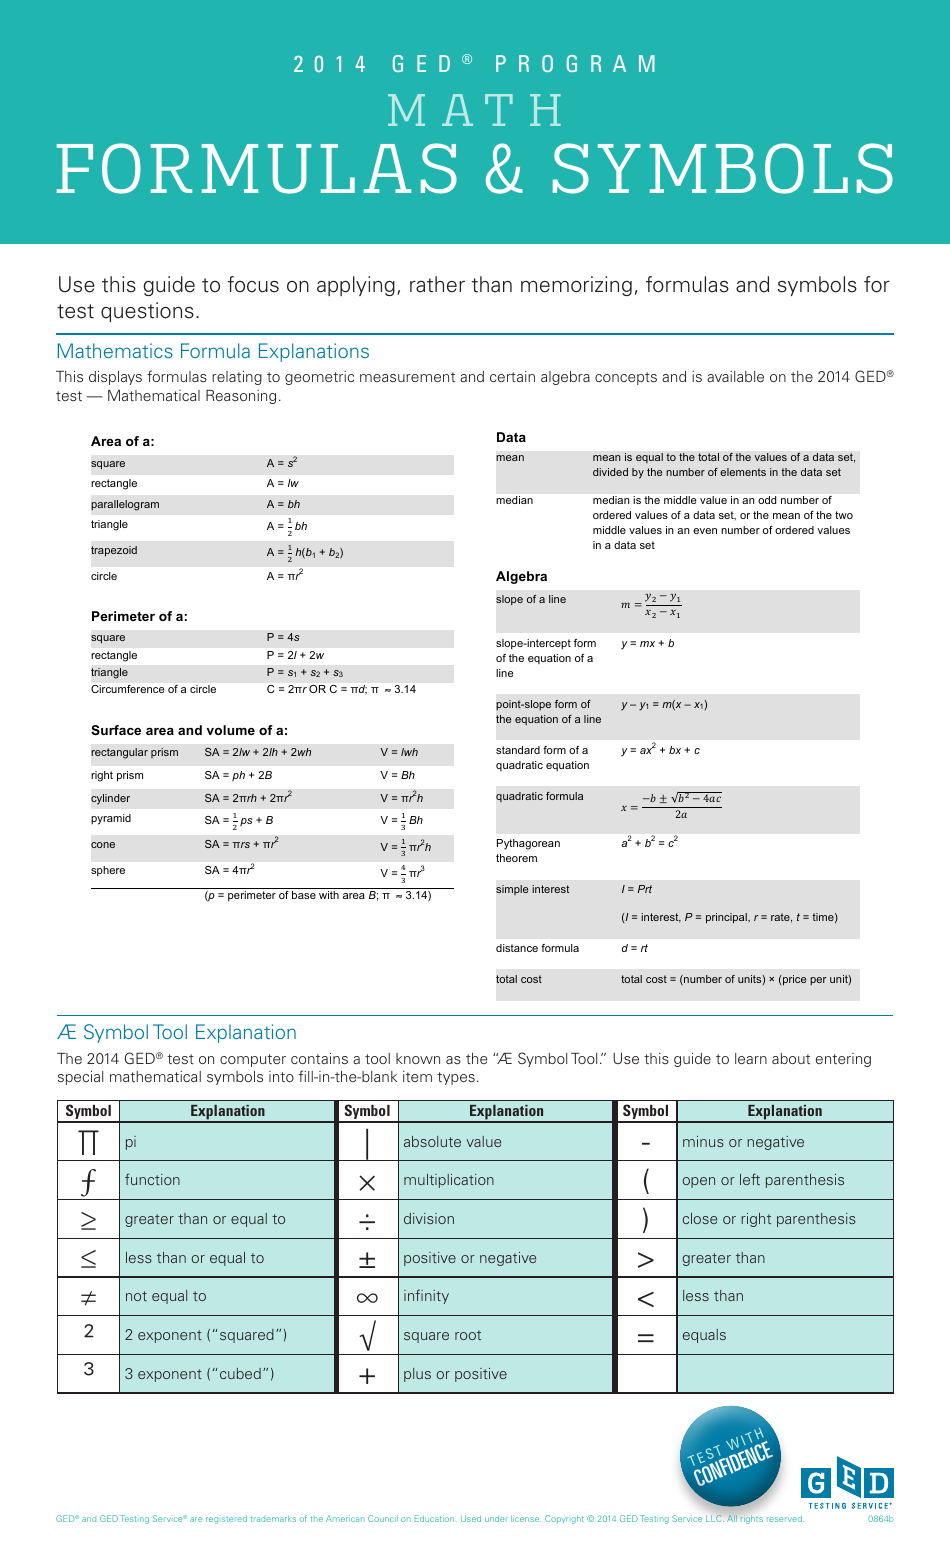 Ged Program Math Formulas & Symbols Sheet Preview Image